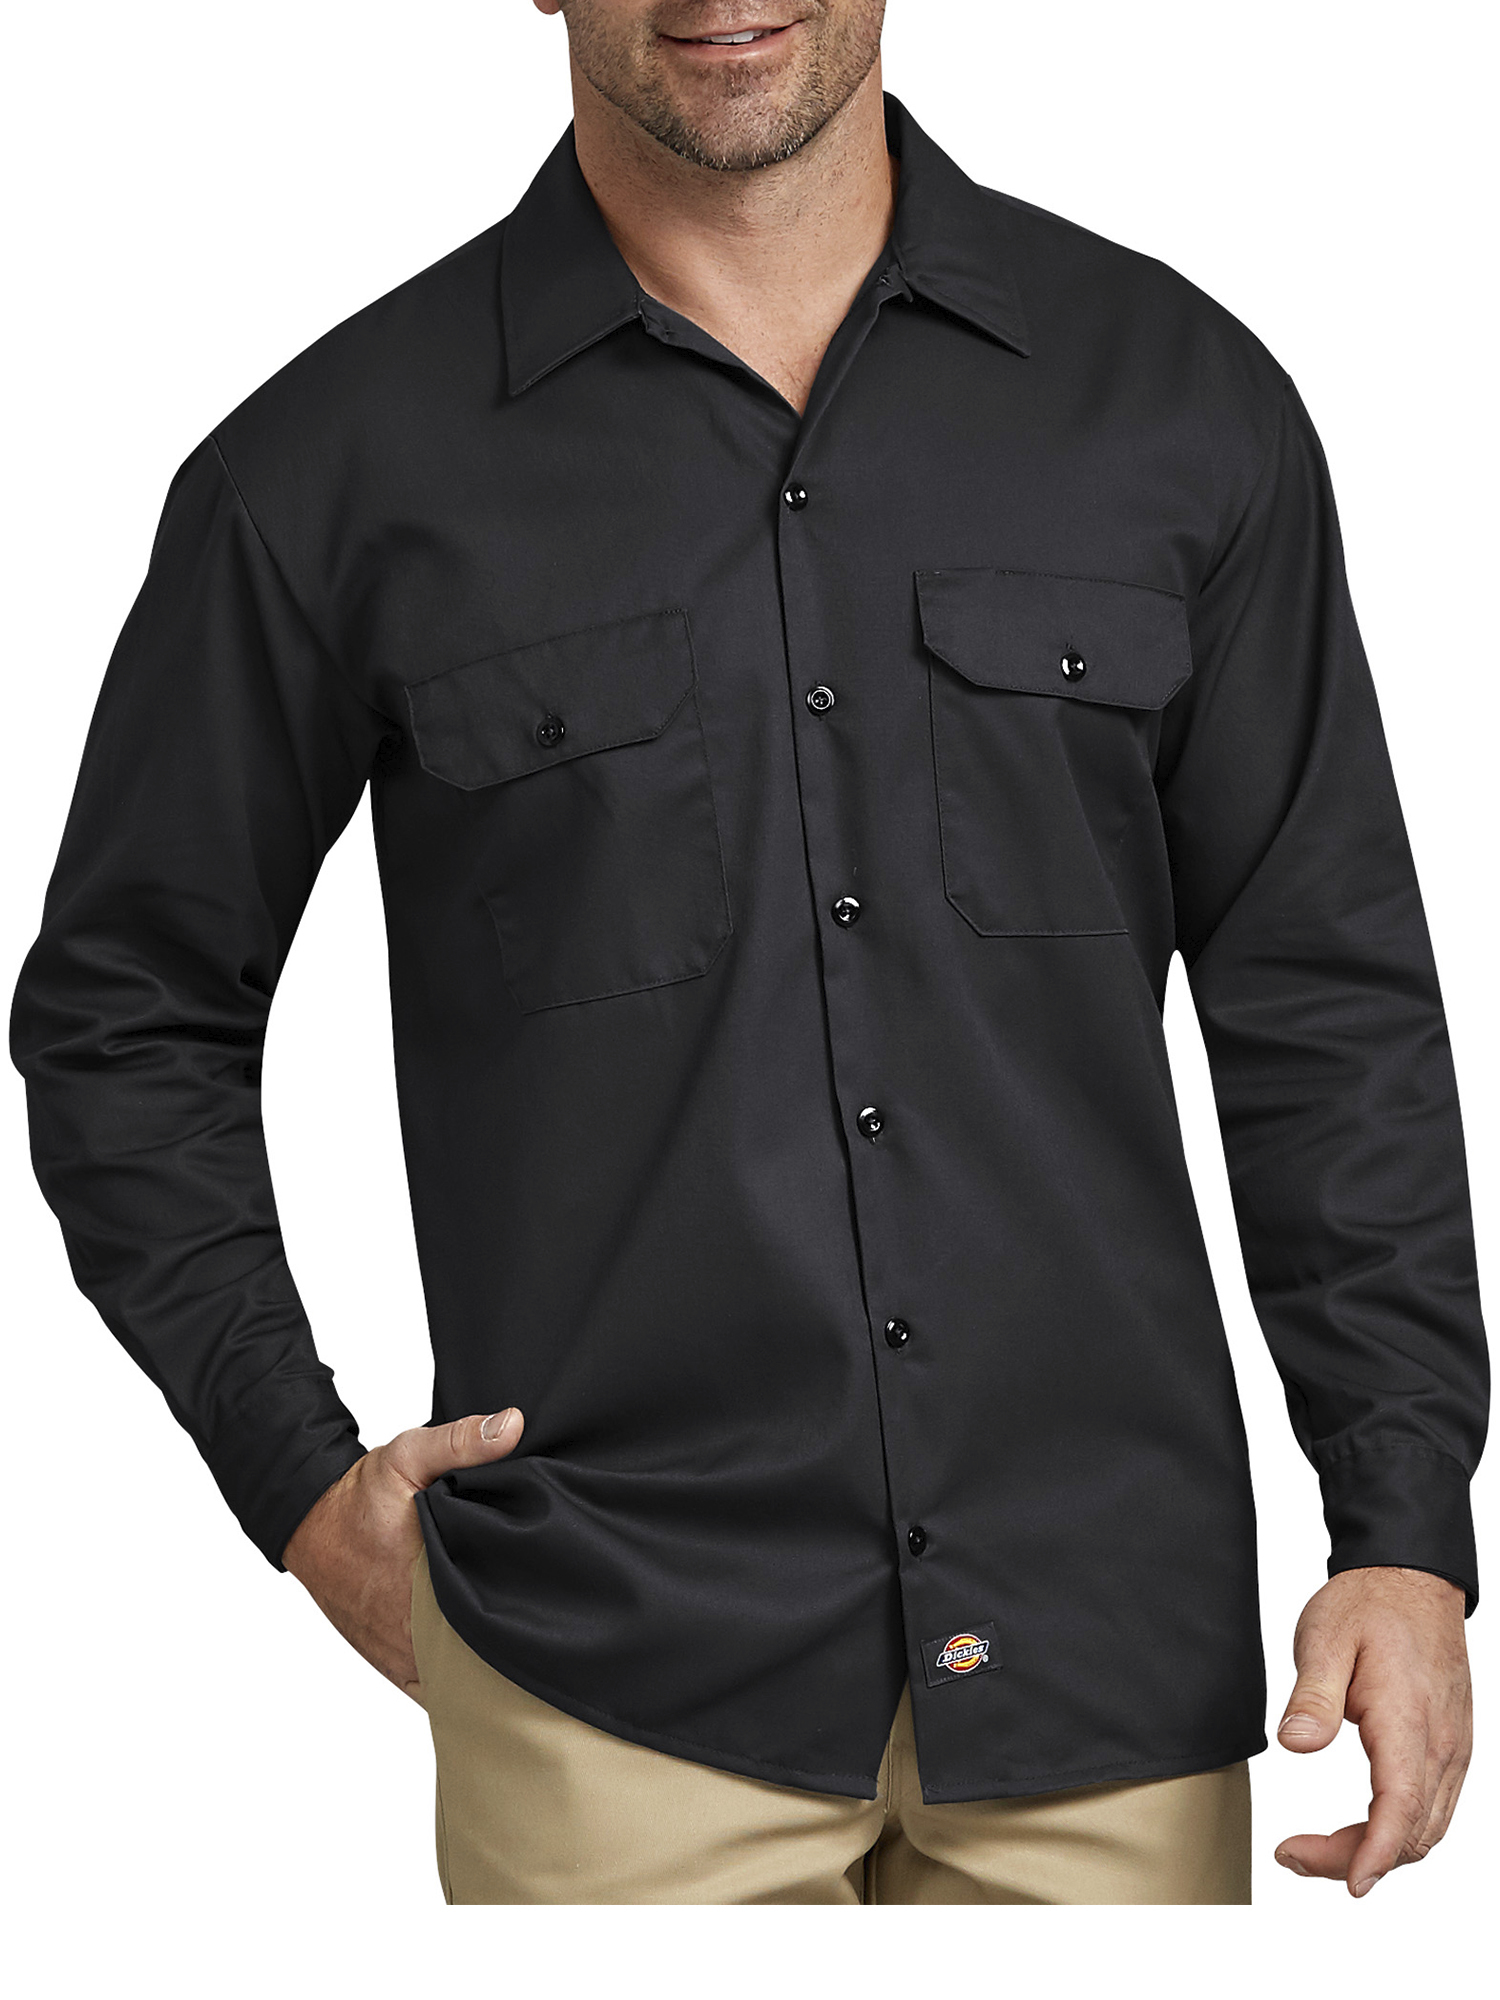 Dickies Mens and Big Men's Original Fit Long Sleeve Twill Work Shirt - image 1 of 2